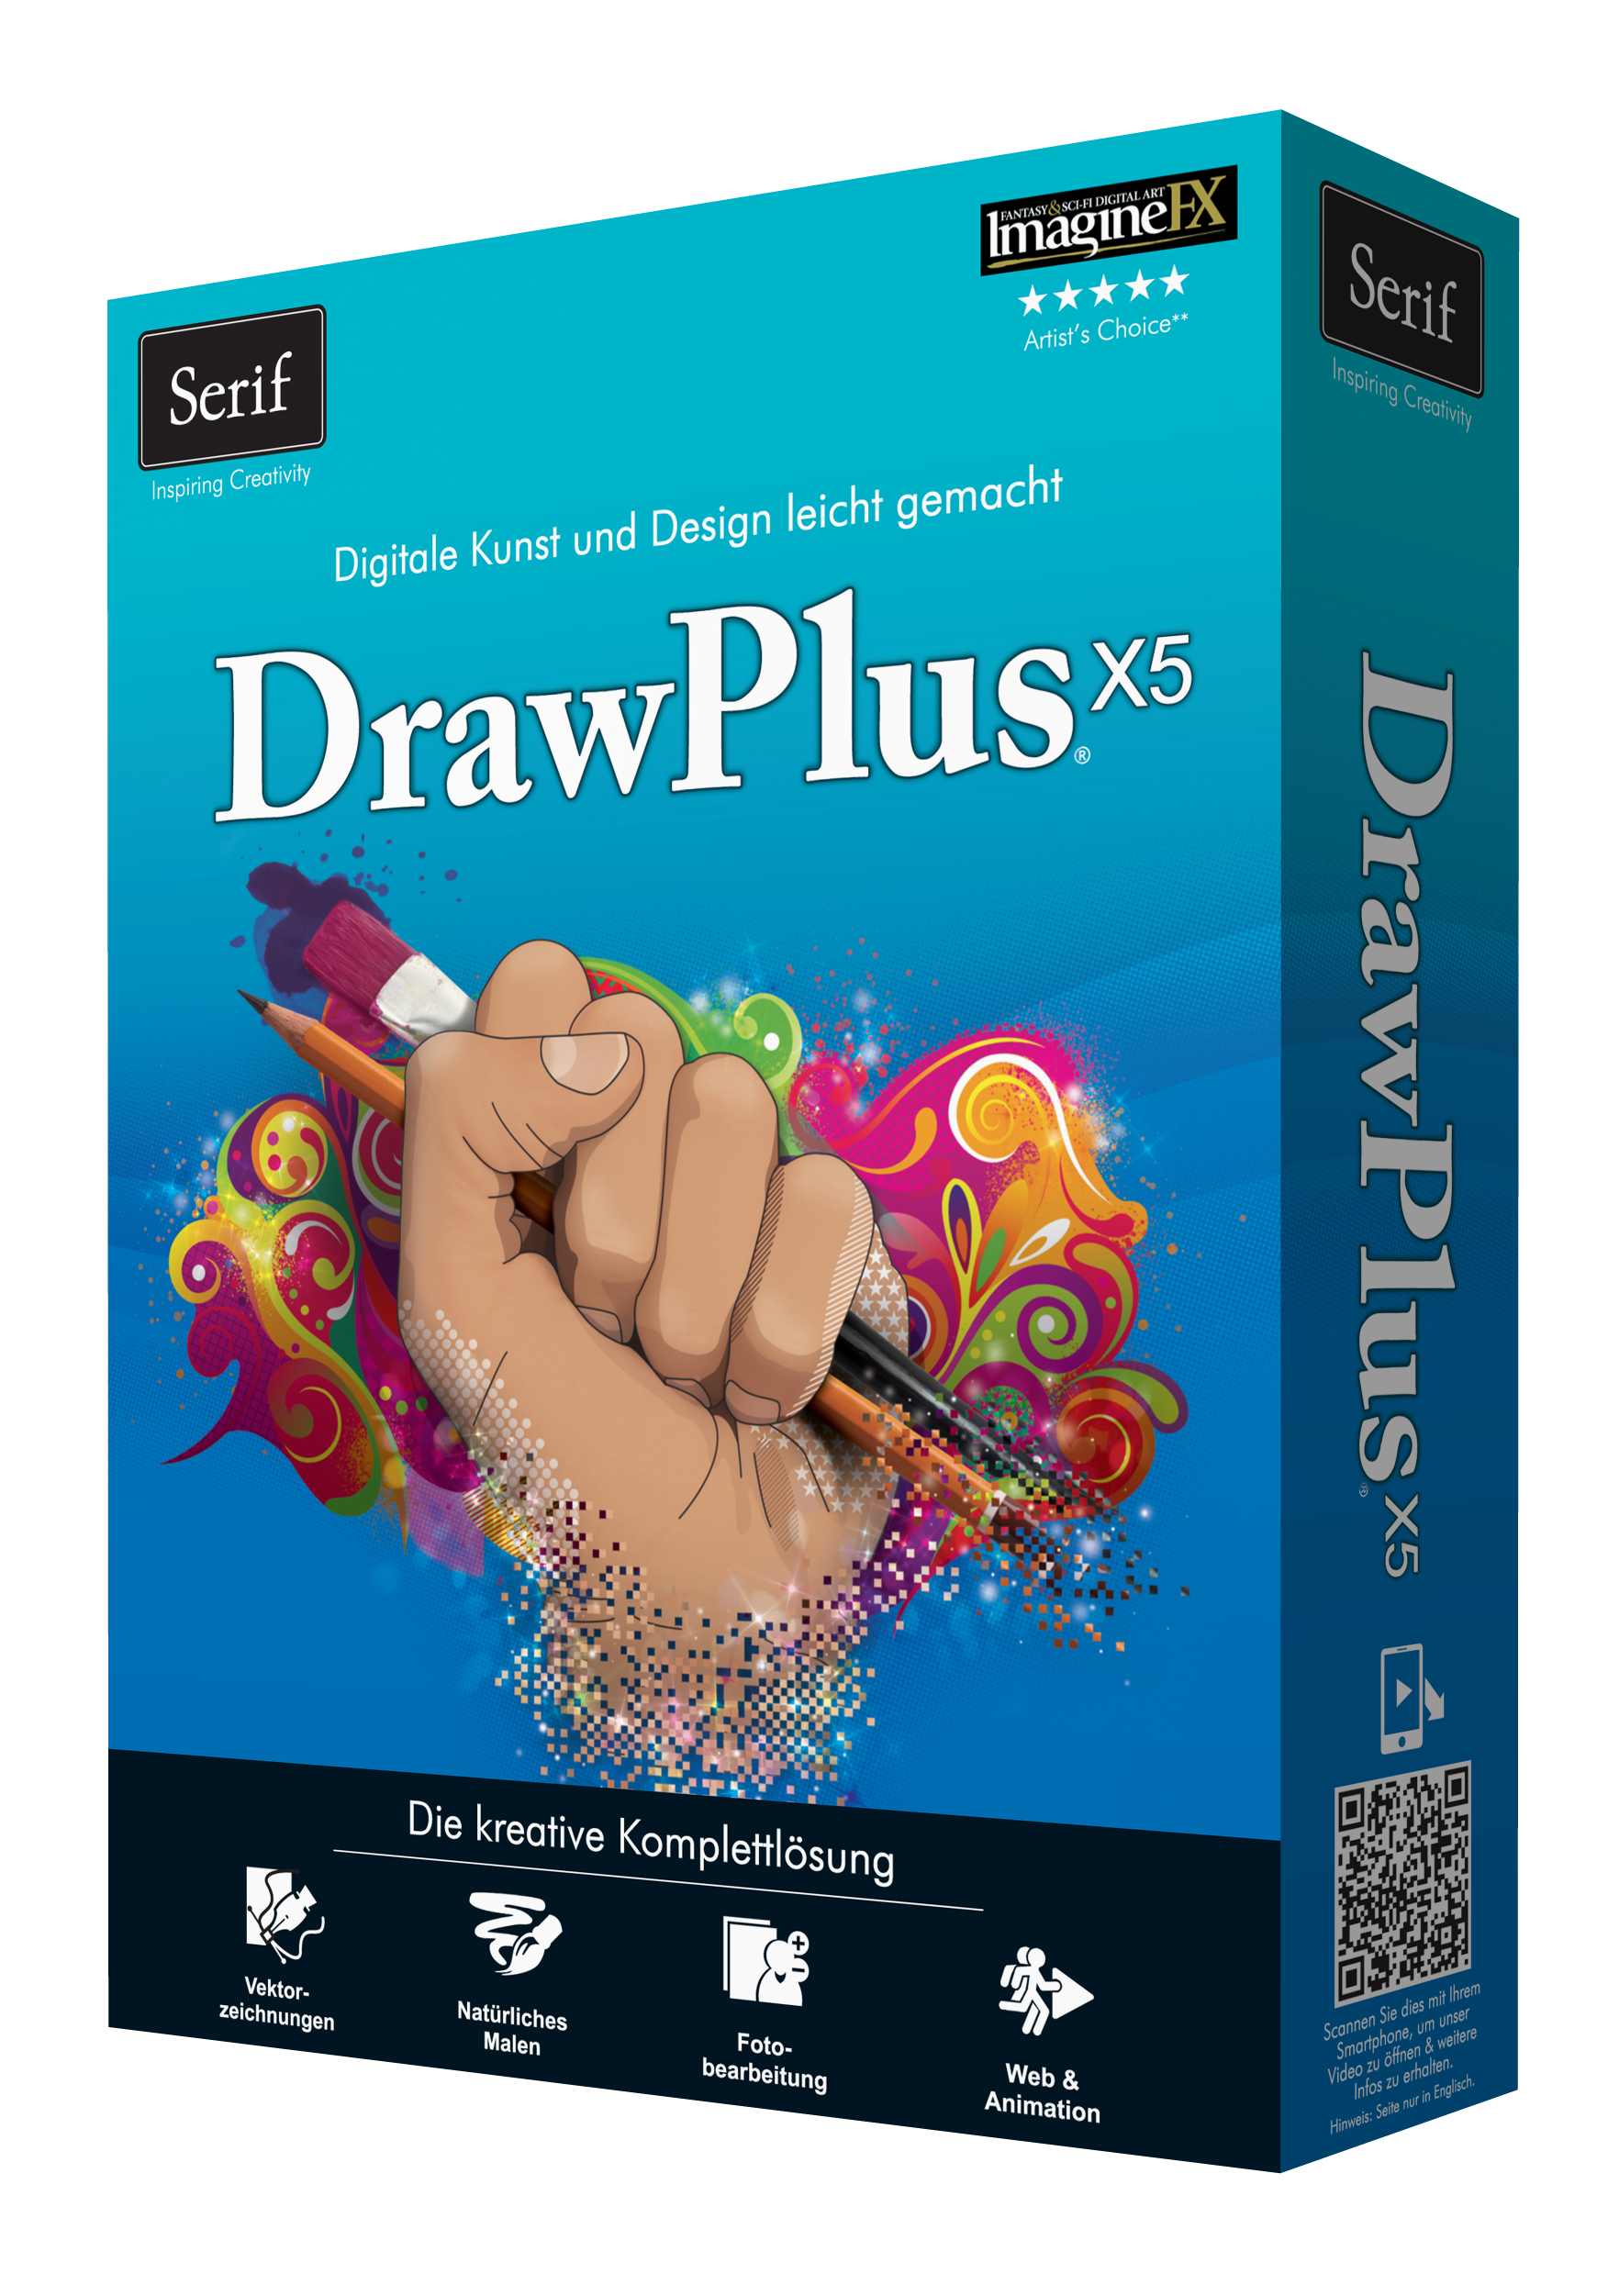 serif drawplus portable